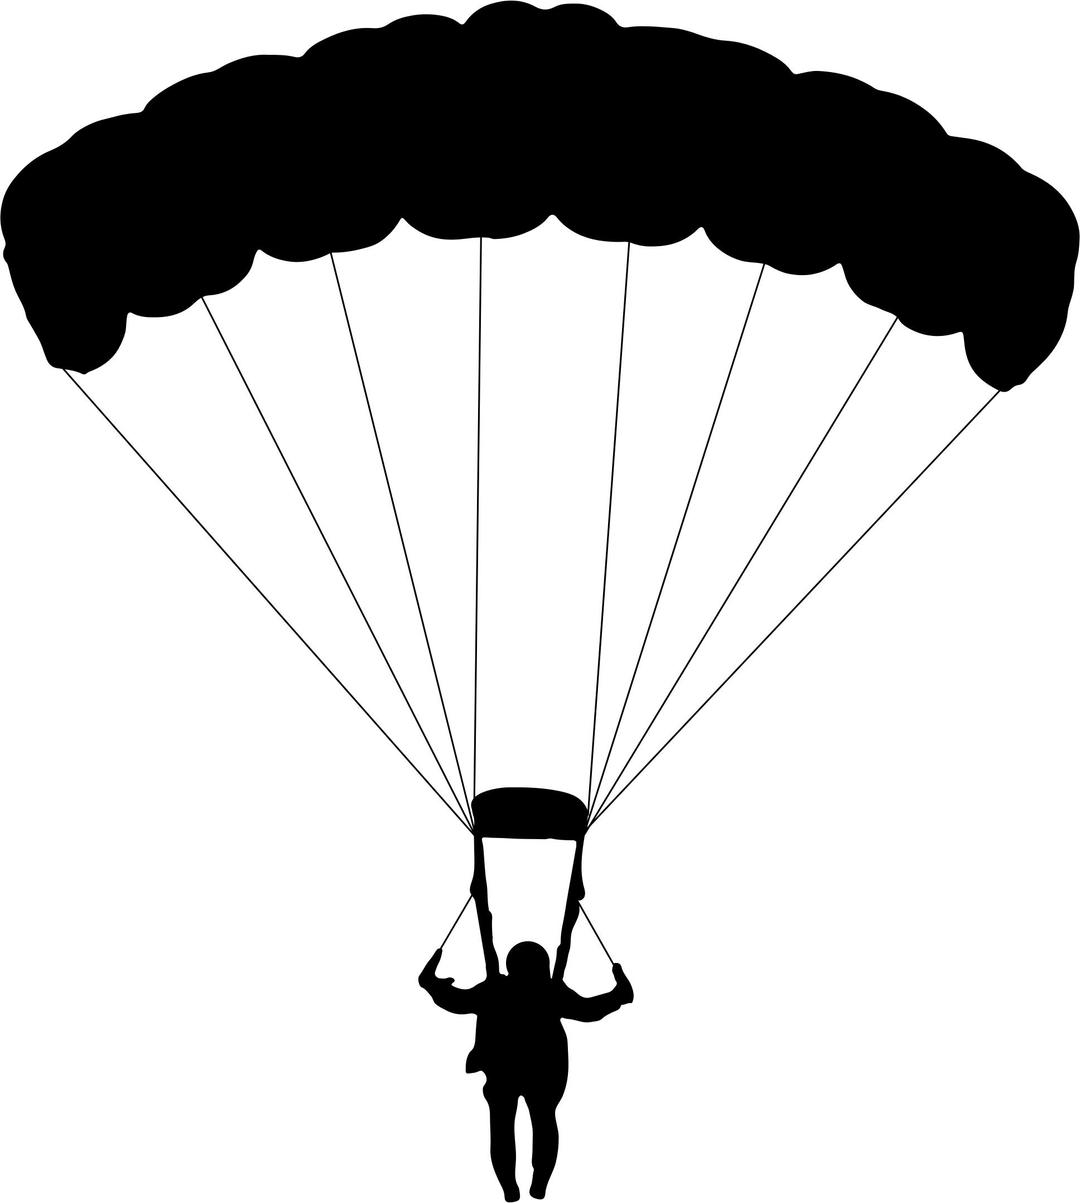 Parachuting Man Silhouette png transparent